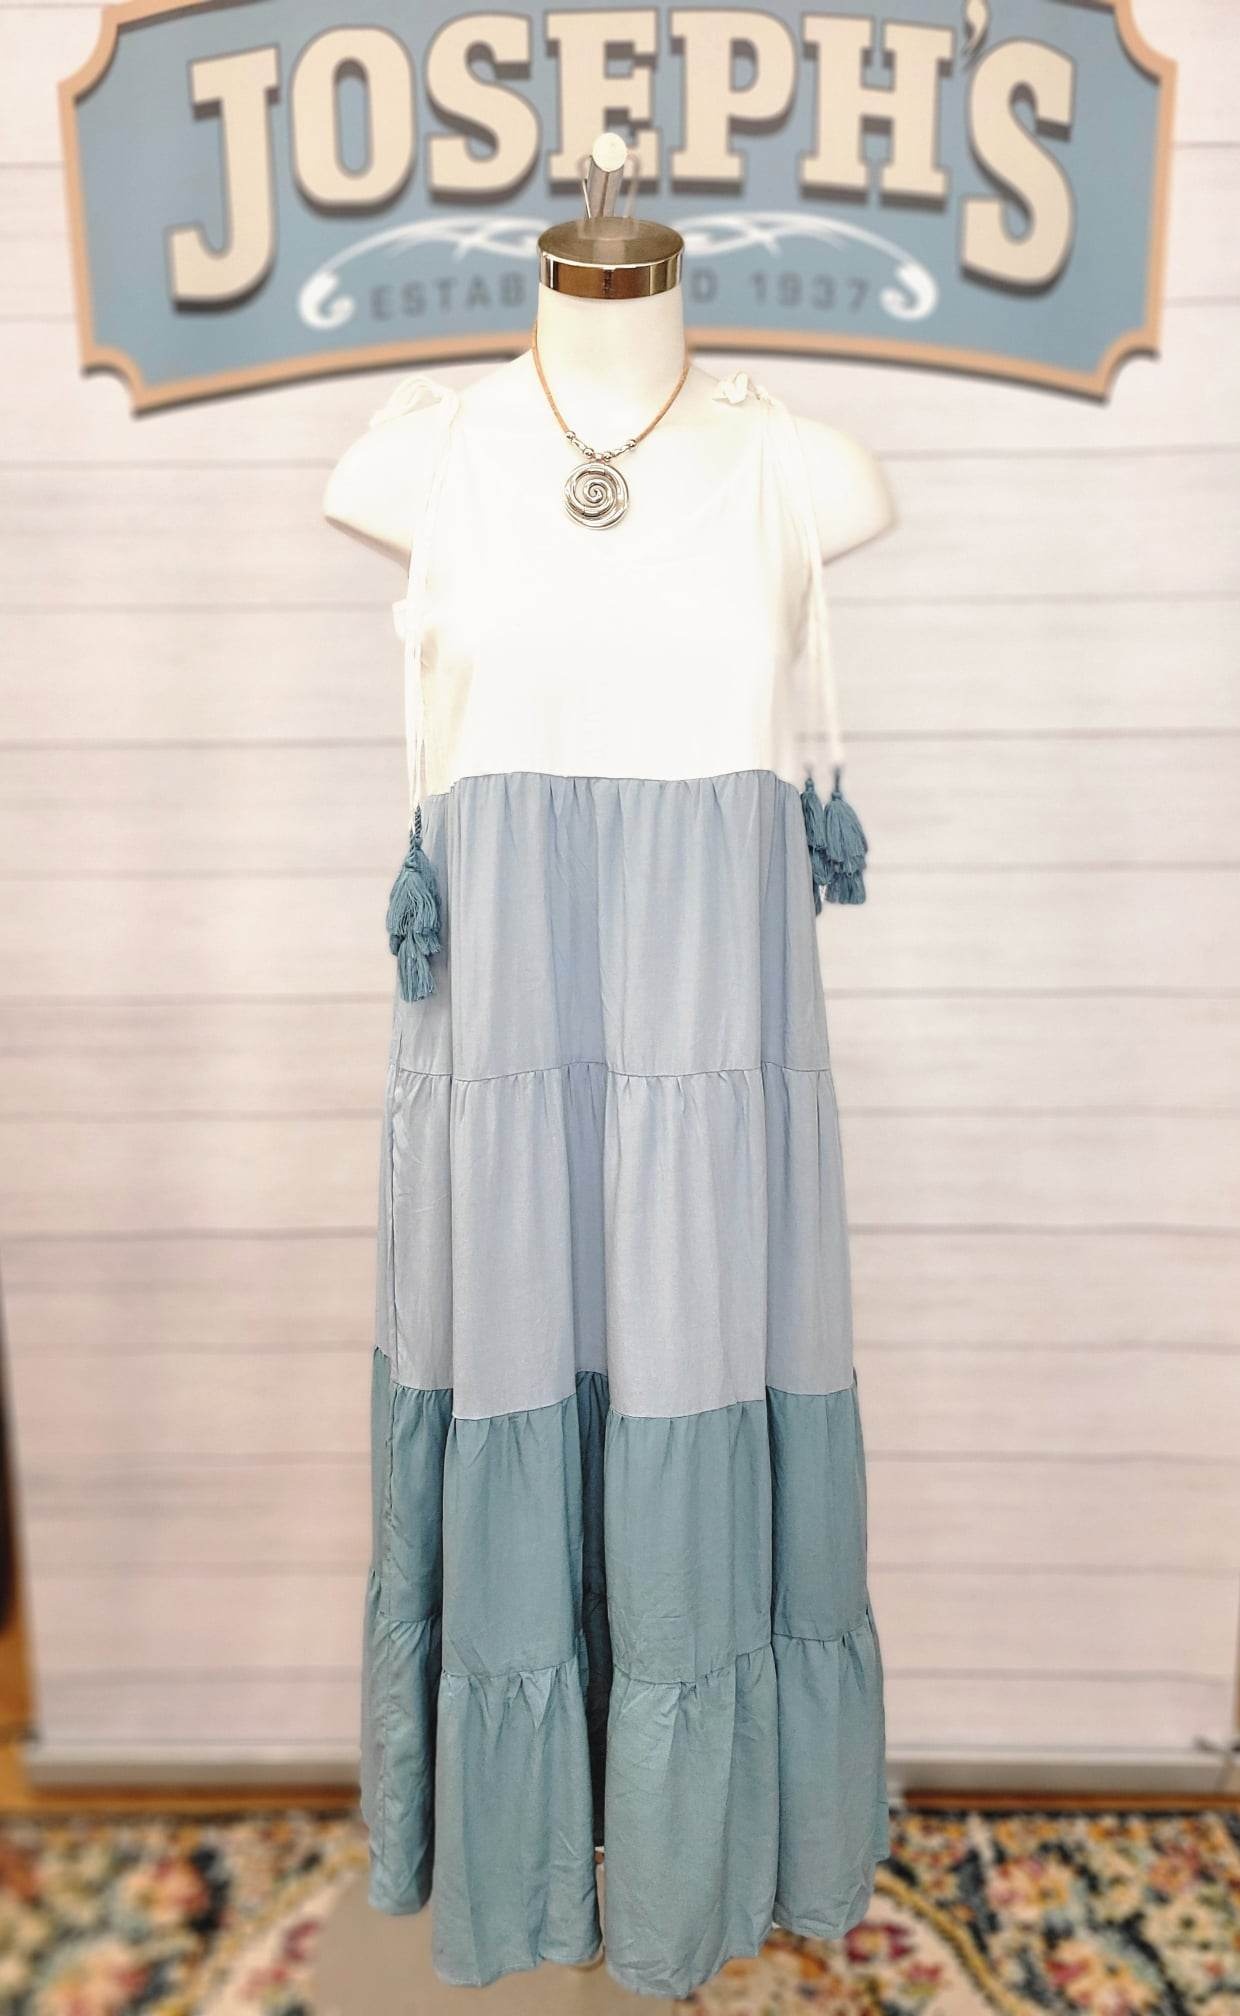 Tiered Color Block Midi Dress with Tassel